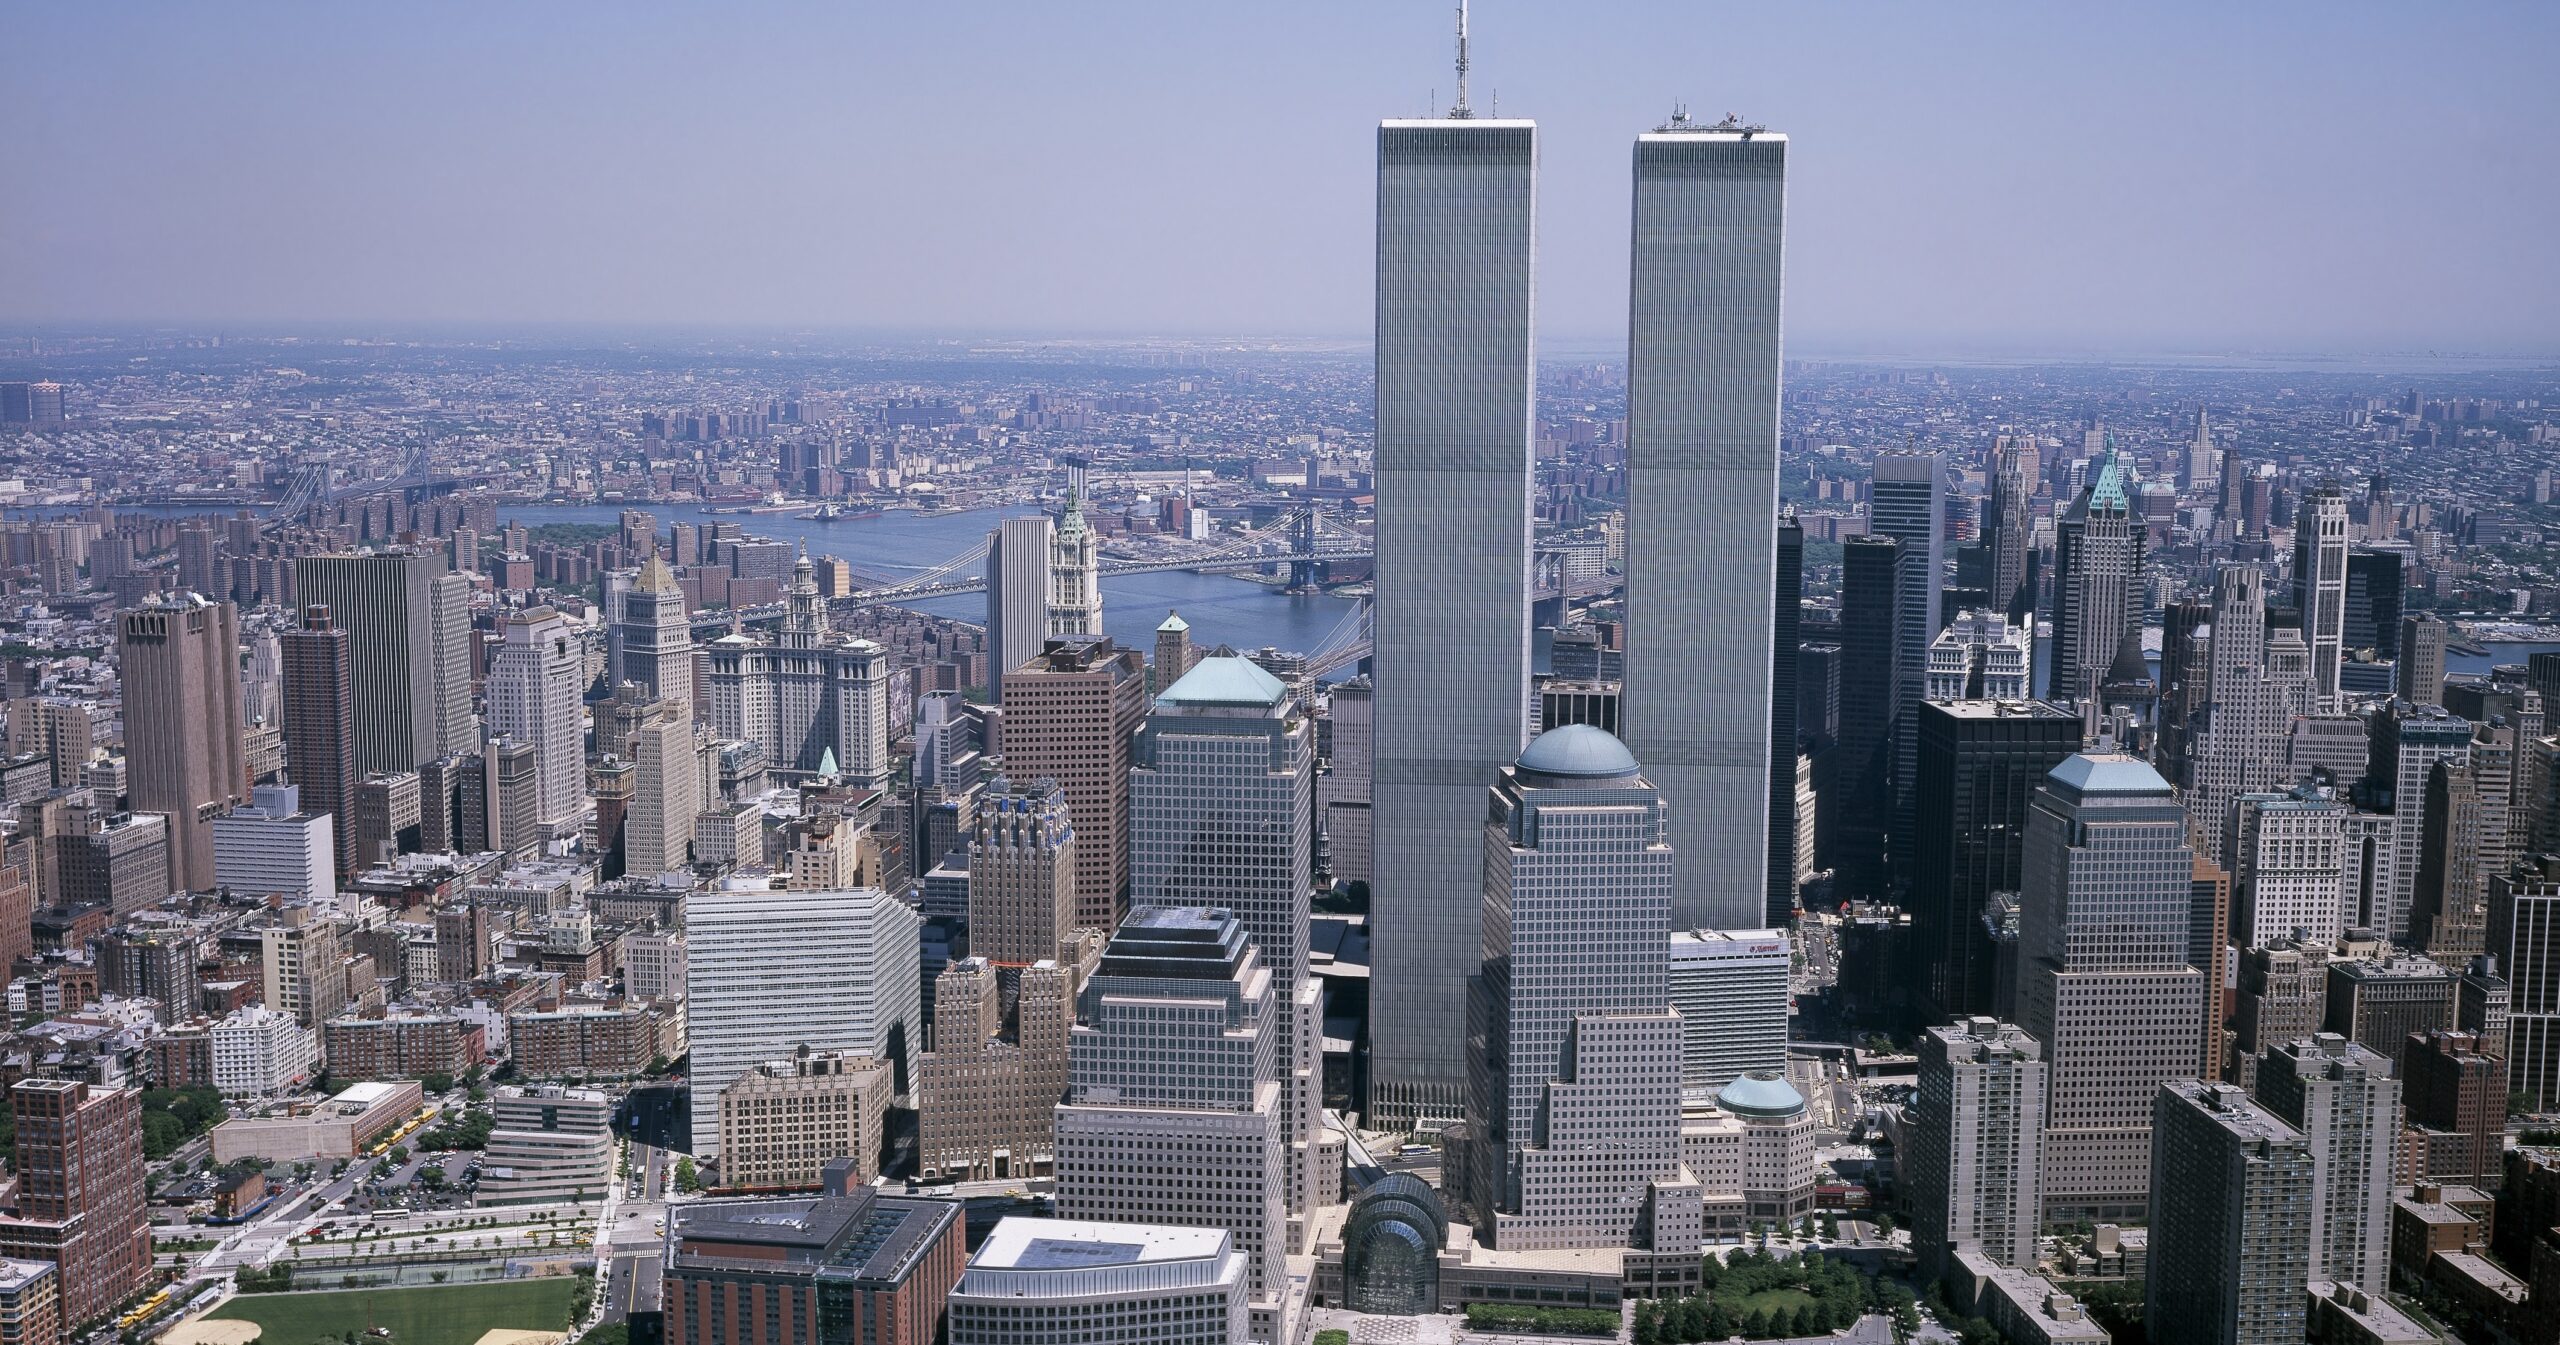 World Trade Center Towers before Terrorist Attacks in 2001